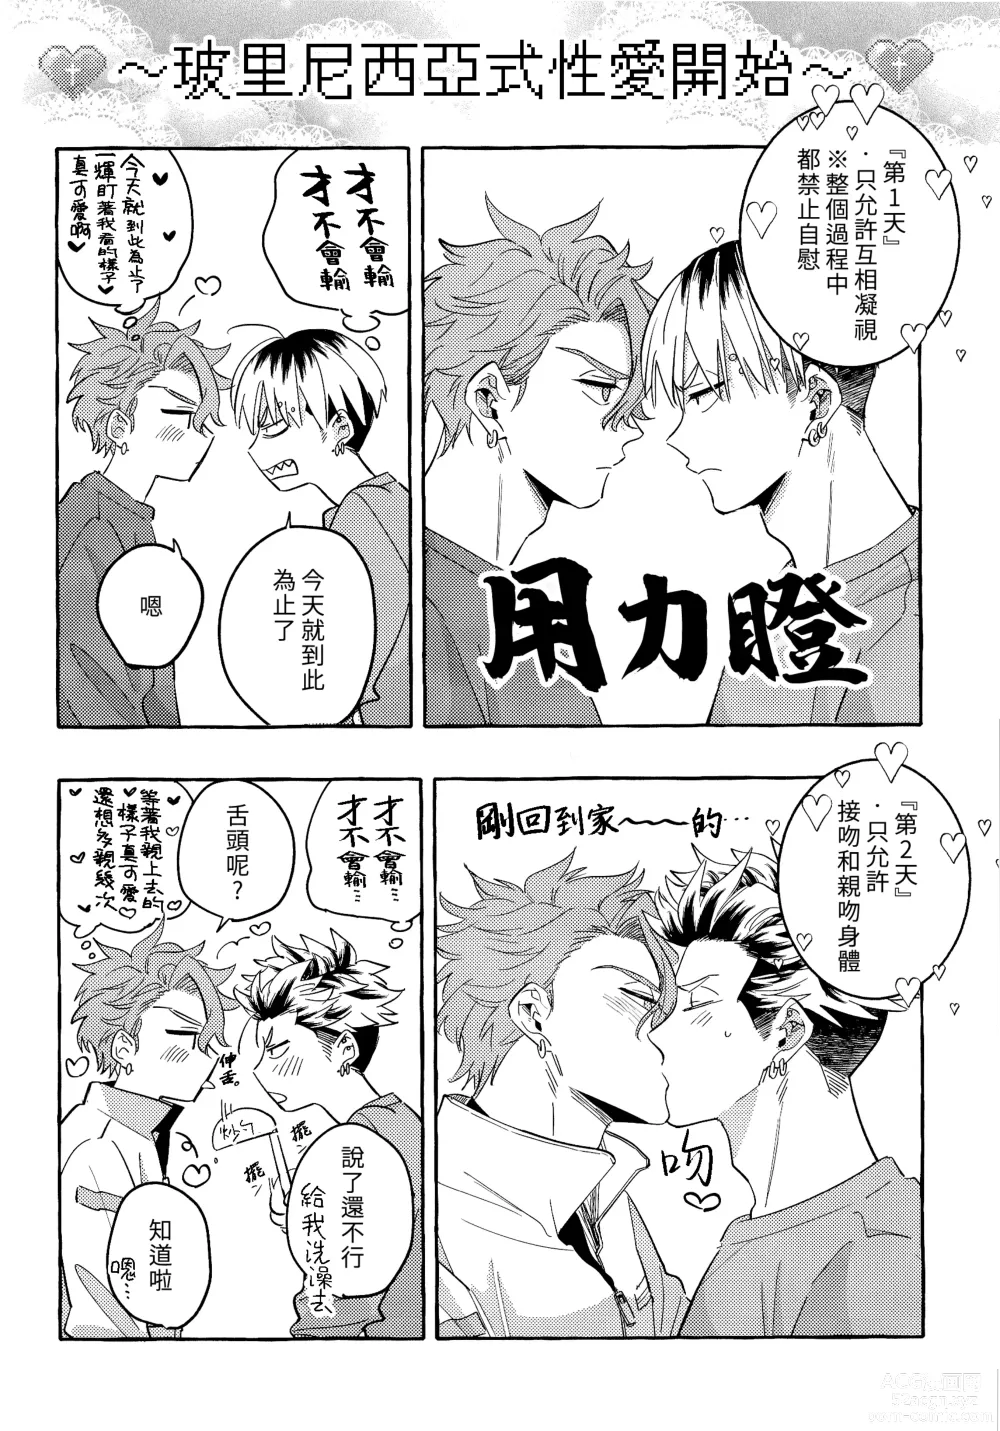 Page 11 of doujinshi skip run!run!run! (uncensored)